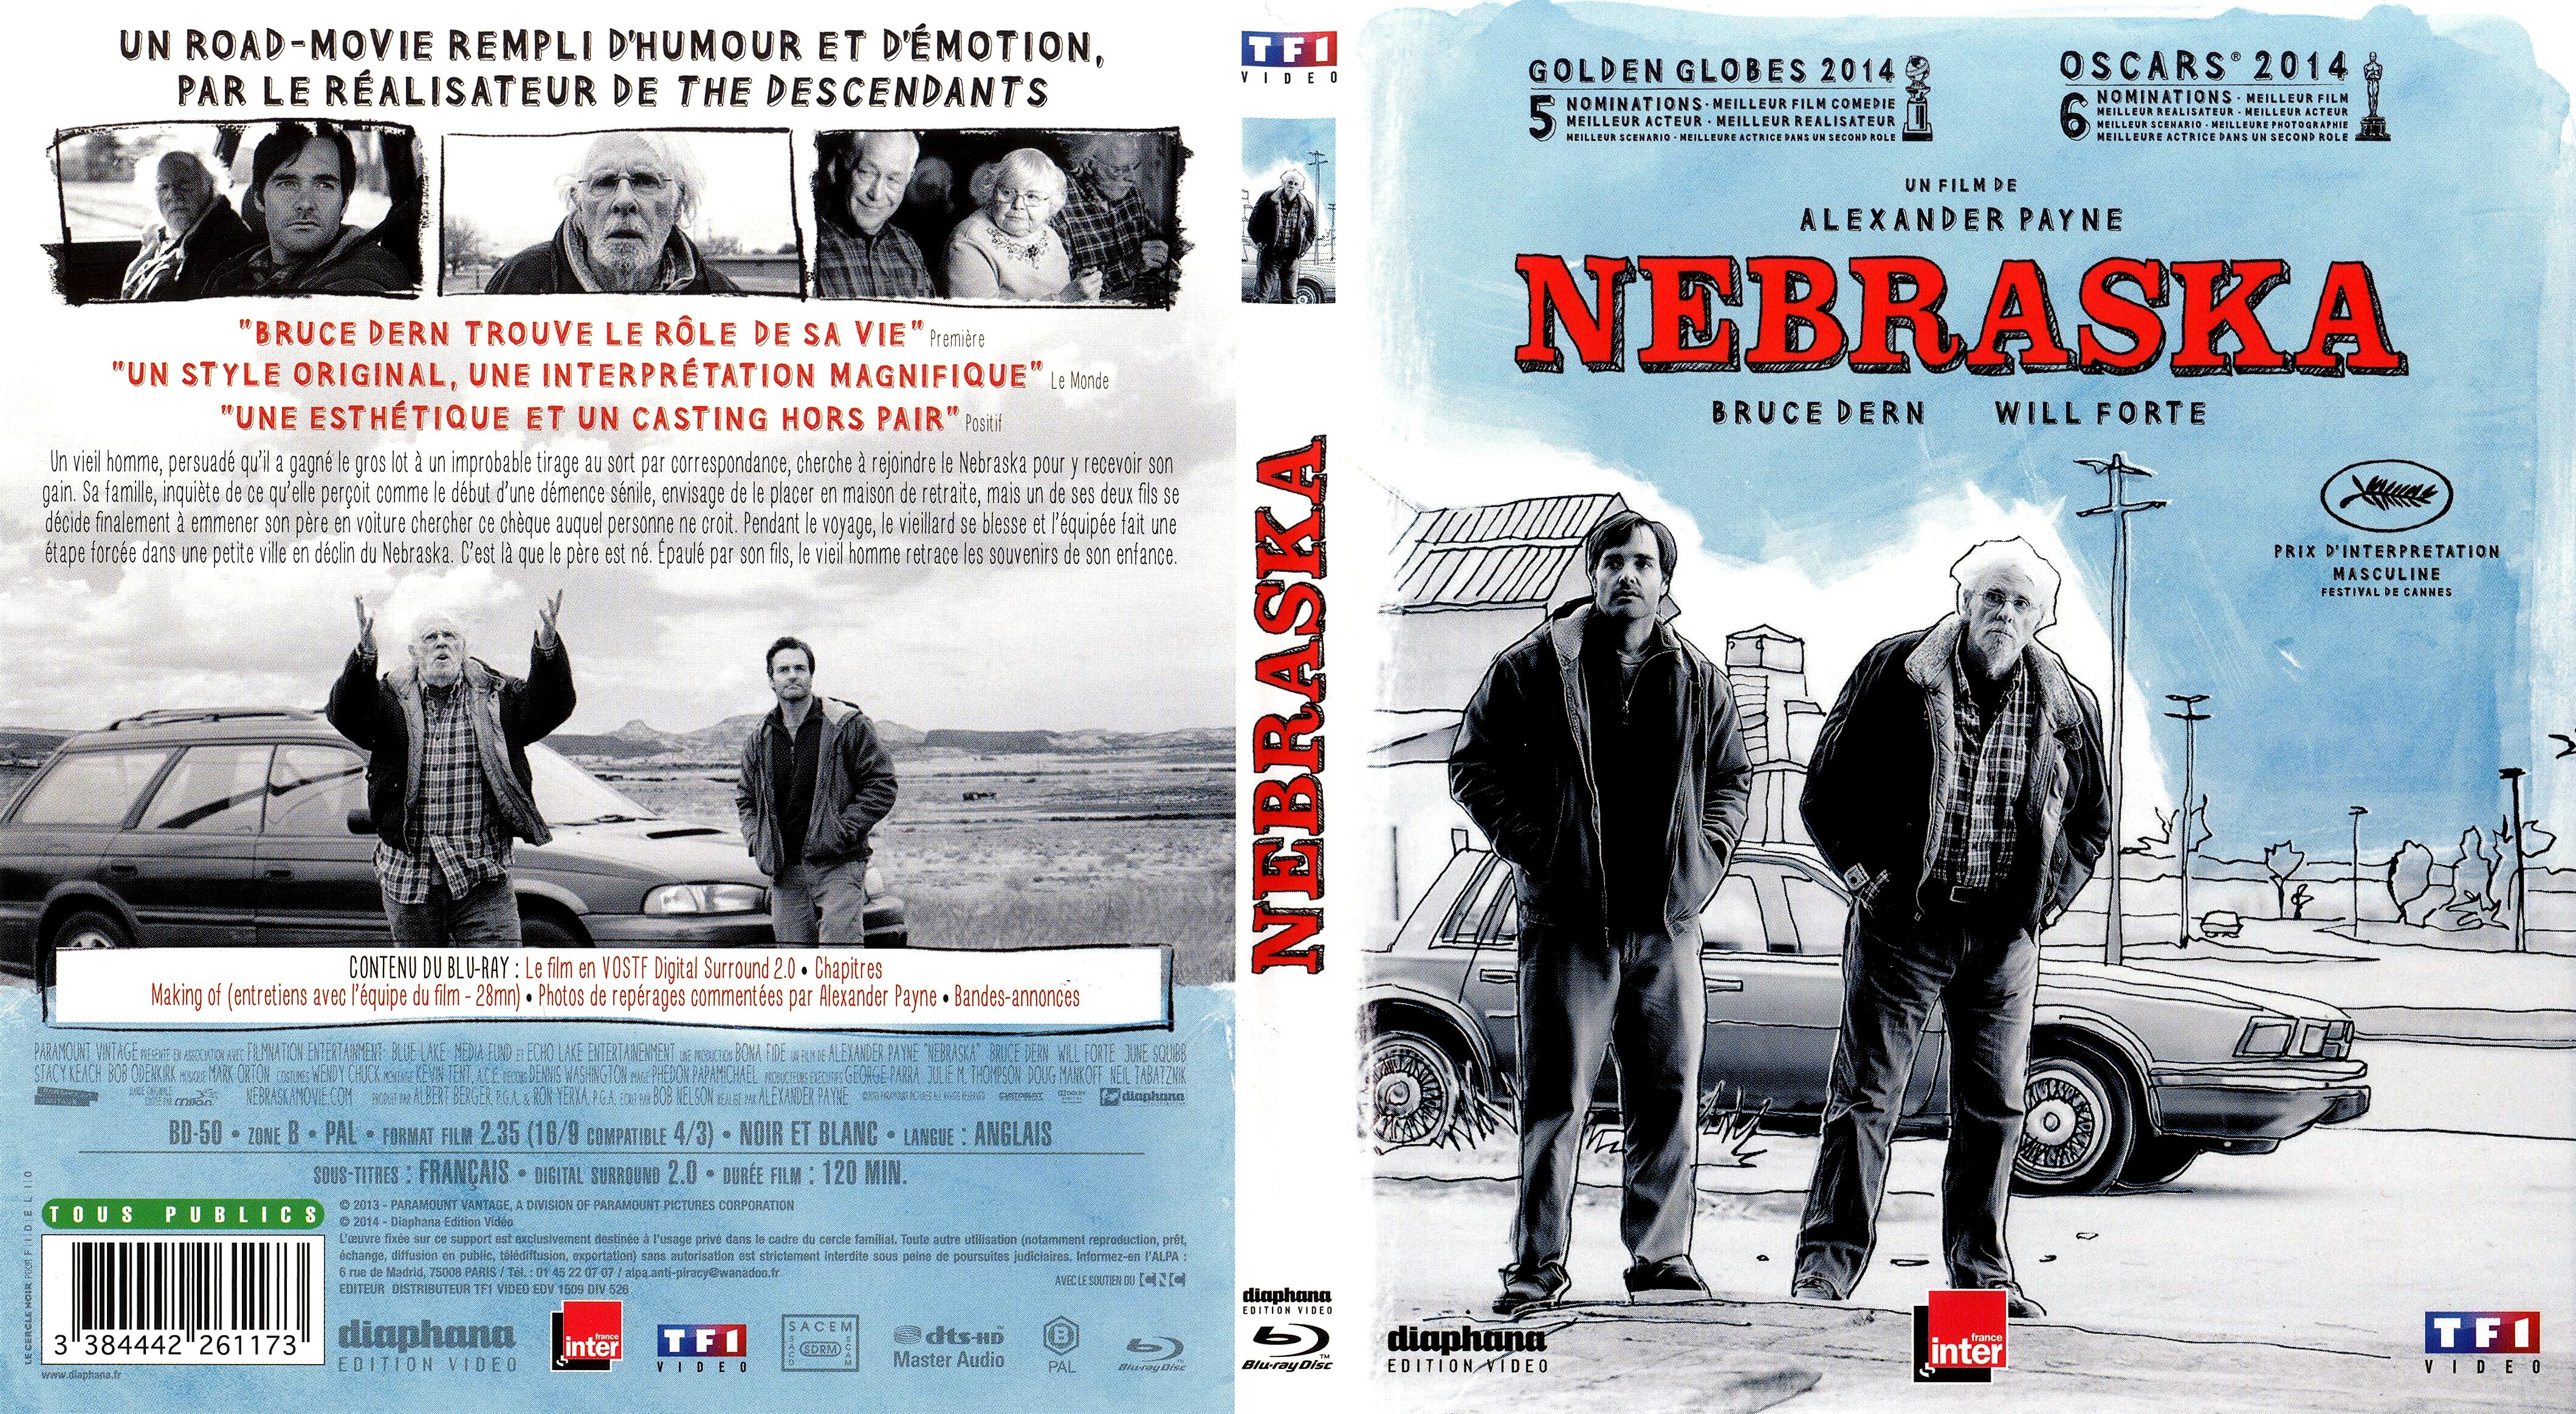 Jaquette DVD Nebraska (BLU-RAY) v2